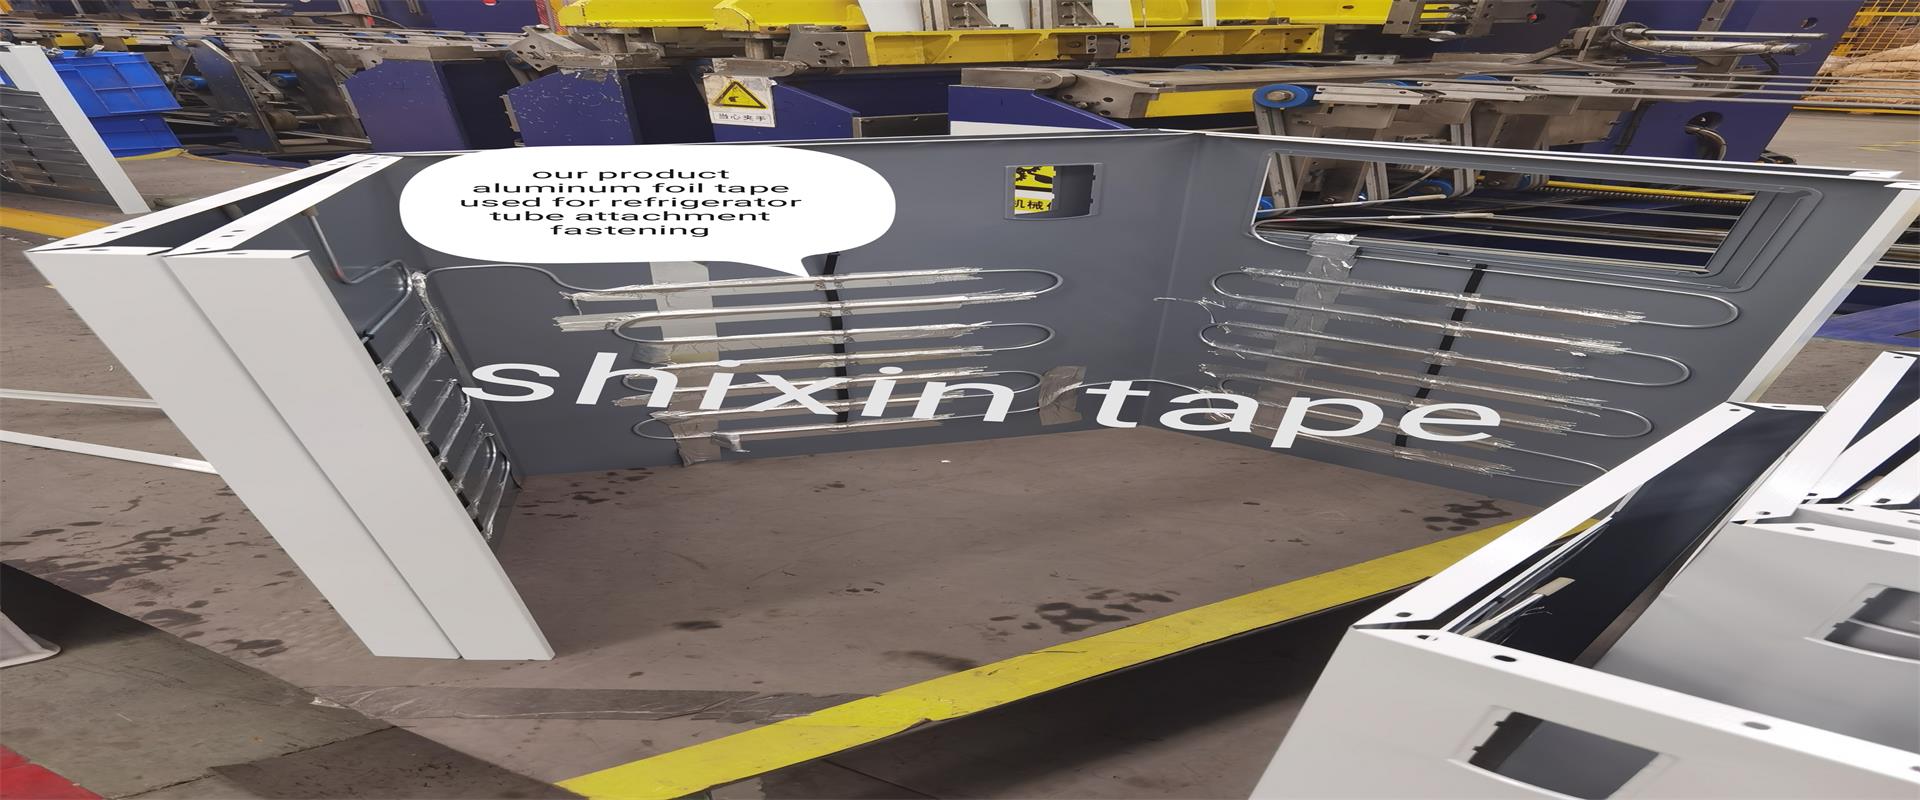 Reinforce aluminum foil tape